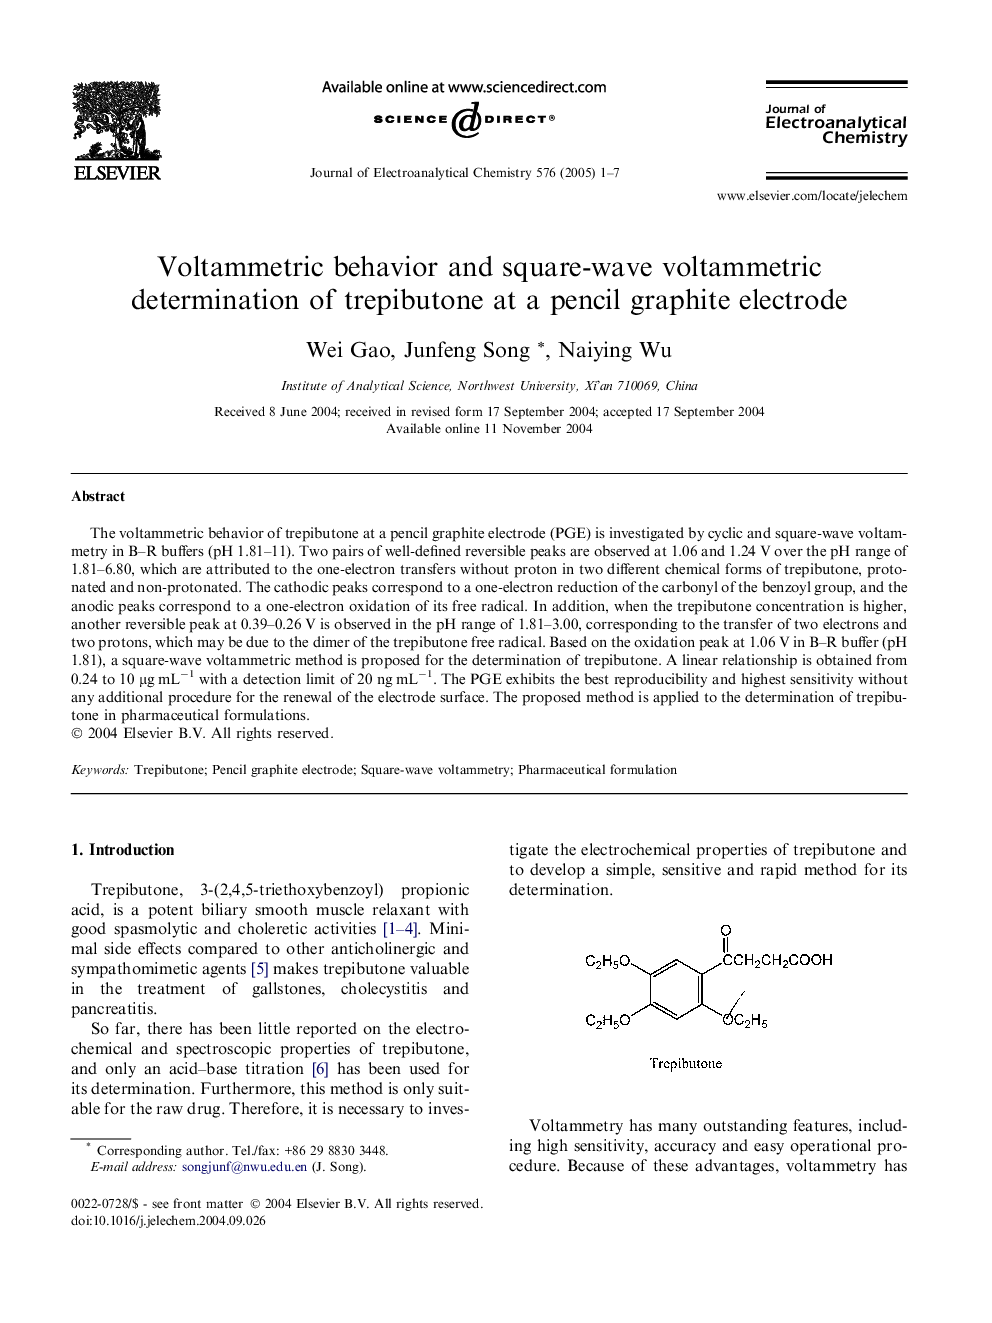 Voltammetric behavior and square-wave voltammetric determination of trepibutone at a pencil graphite electrode